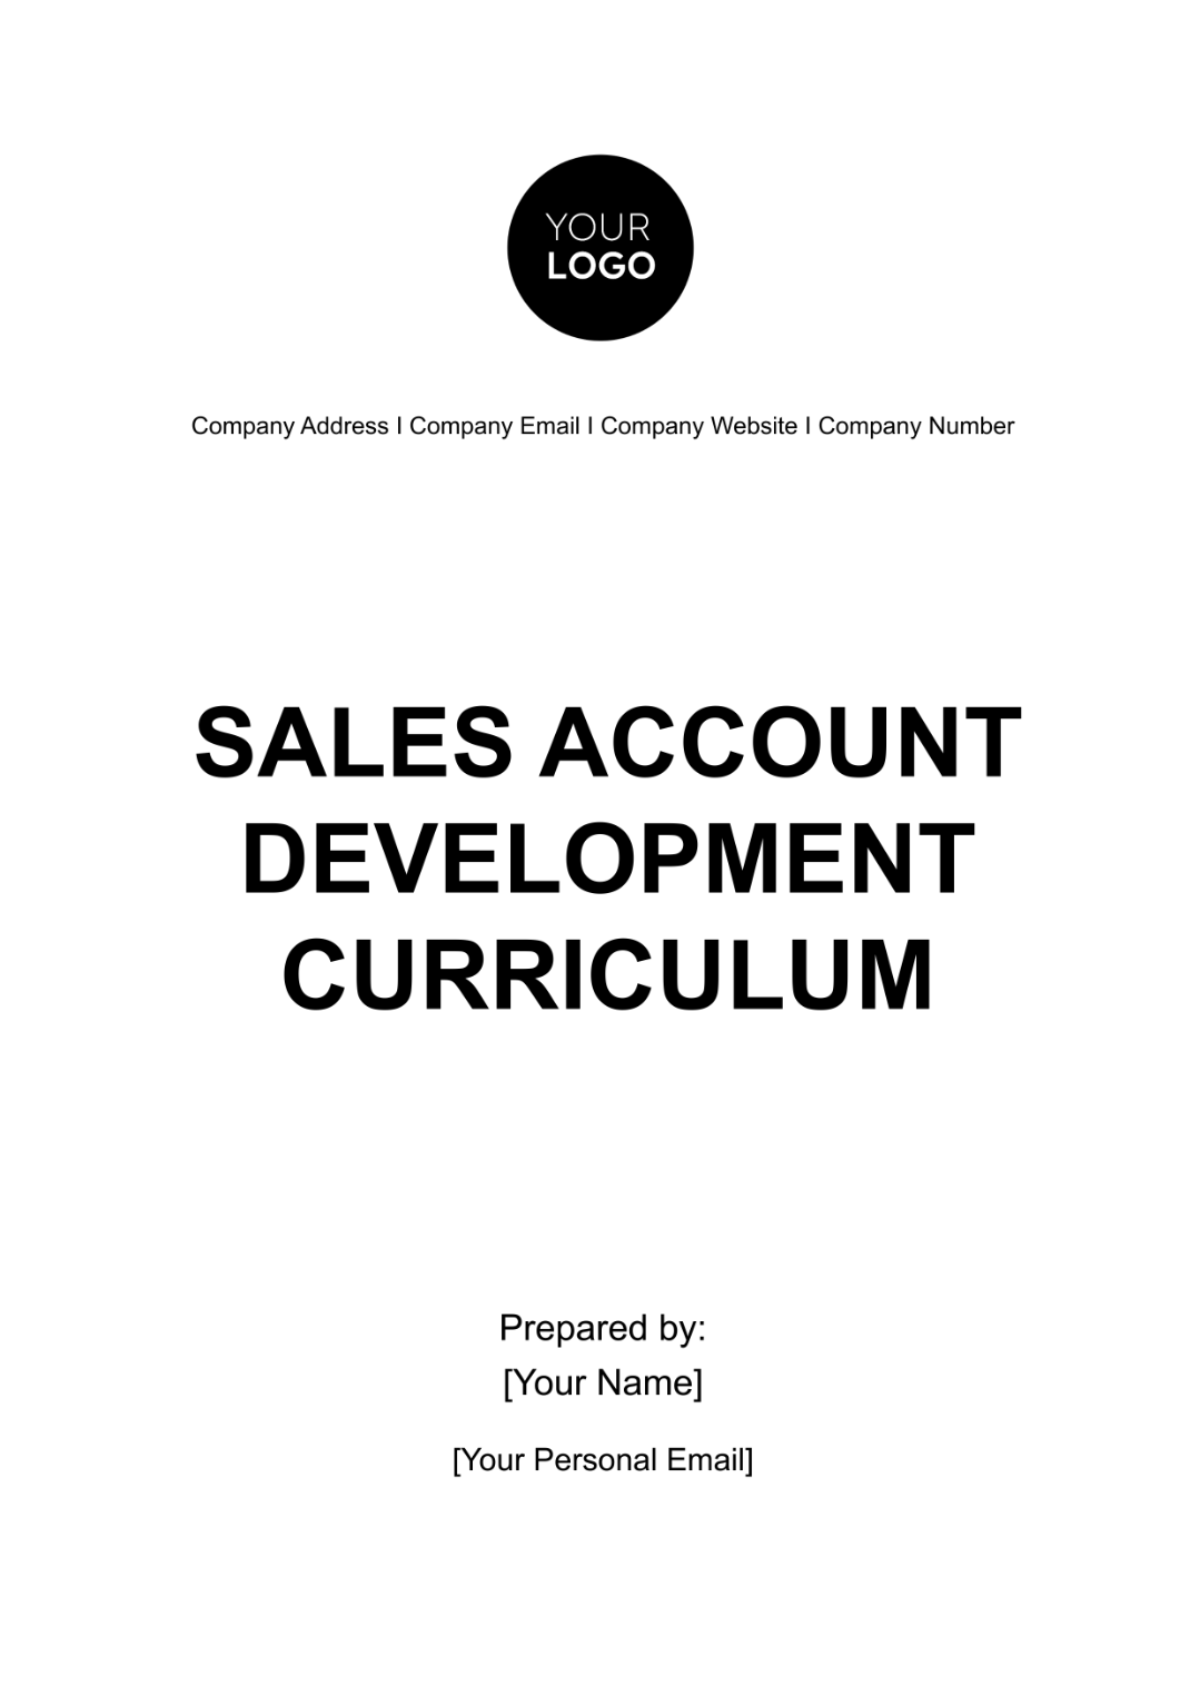 Sales Account Development Curriculum Template